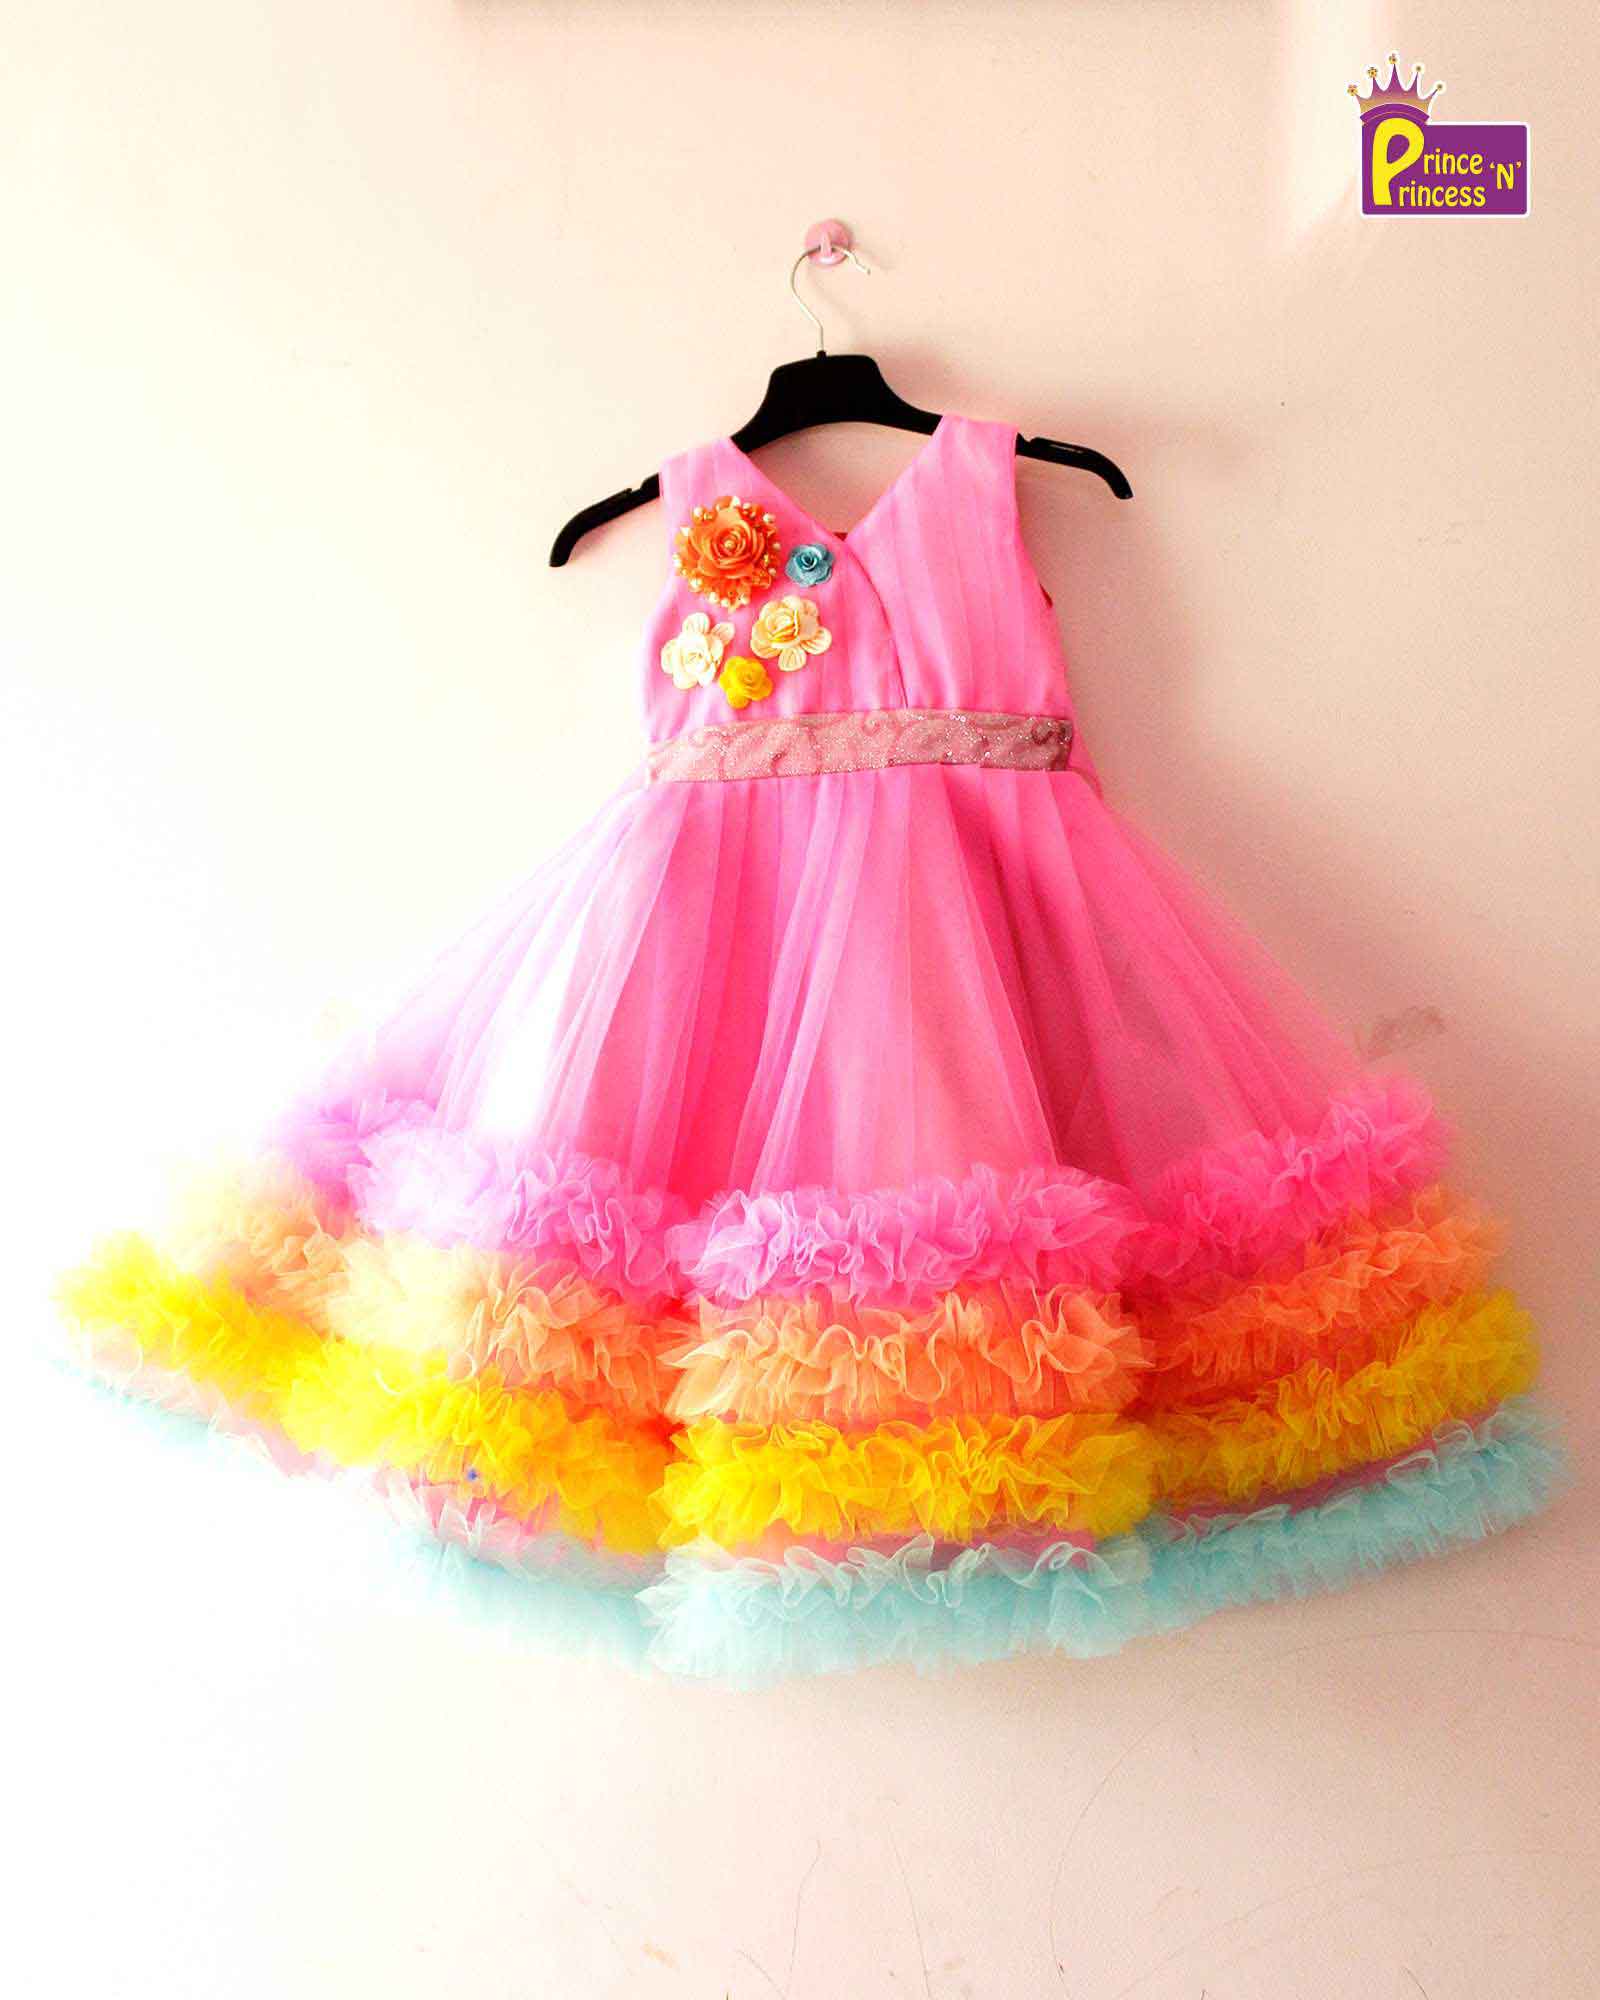 Kids grand gown from princenprincess | Kids gown, Kids' dresses, Saree dress